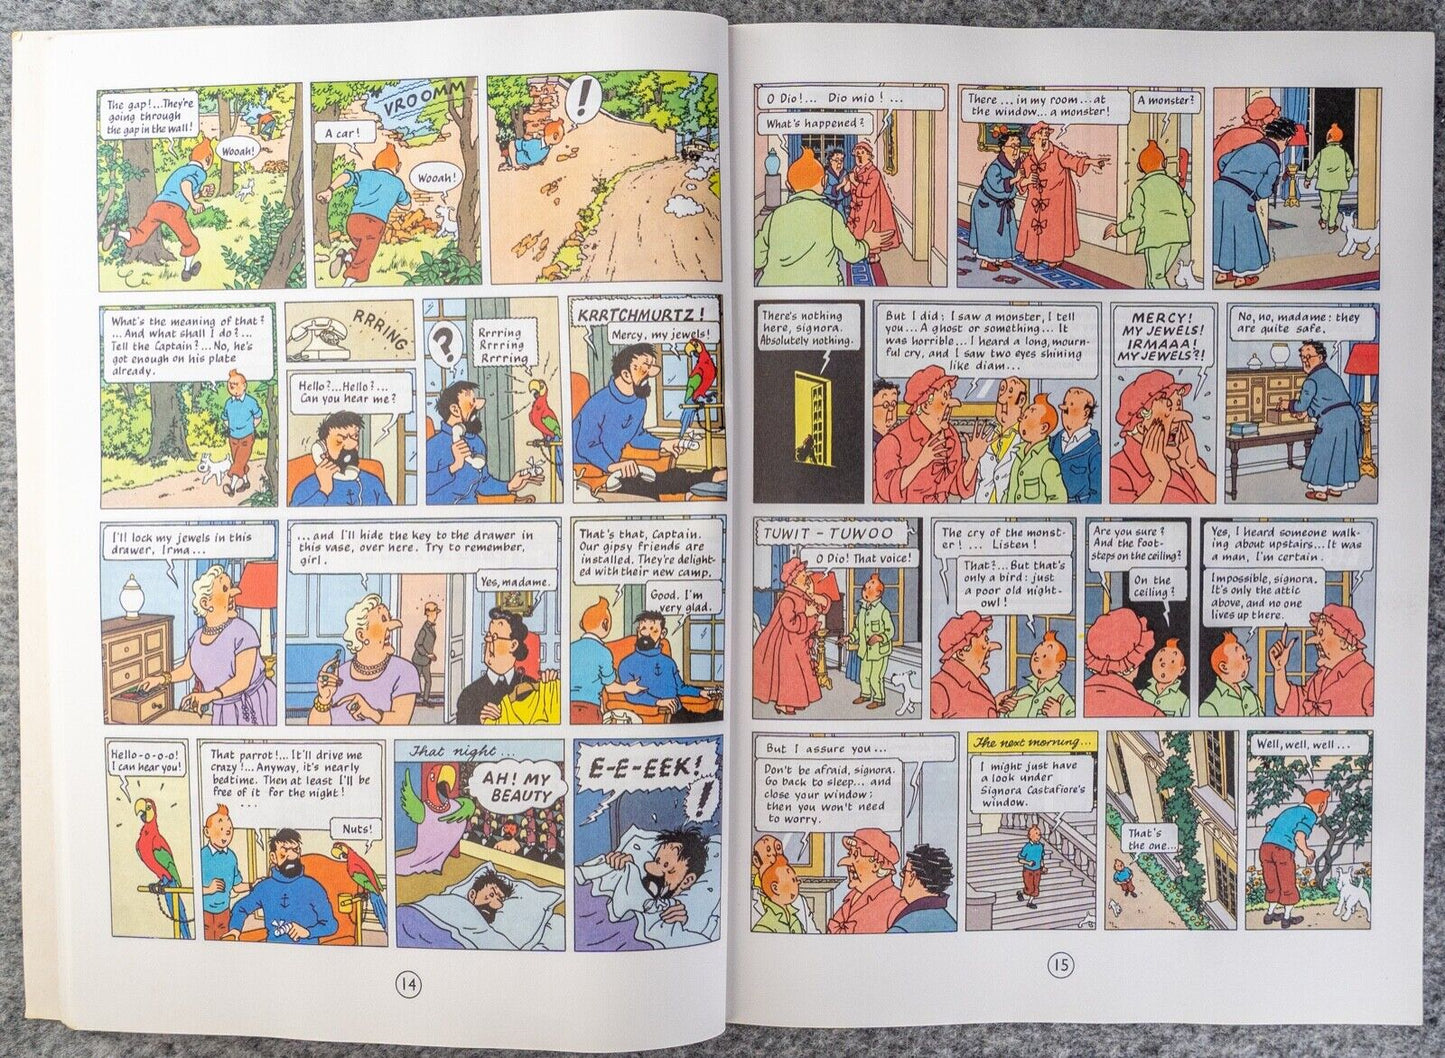 The Castafiore Emerald - Tintin Mammoth UK Paperback Edition Book 1990s